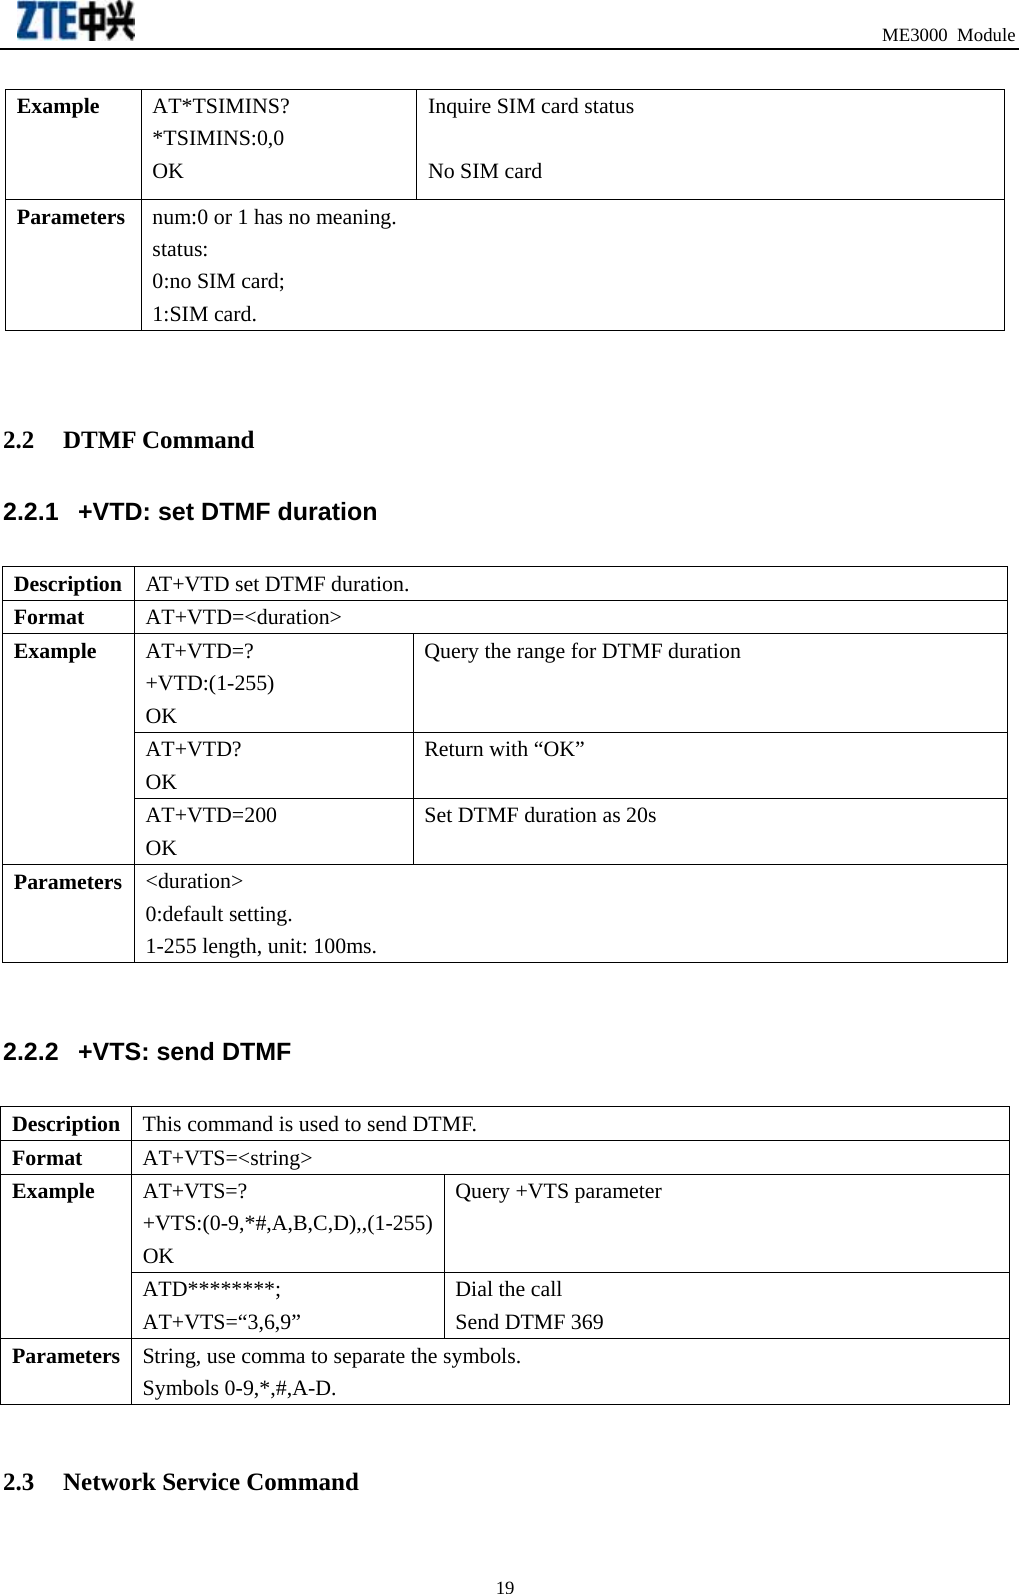                                                                               ME3000 Module Example  AT*TSIMINS? *TSIMINS:0,0 OK Inquire SIM card status    No SIM card Parameters  num:0 or 1 has no meaning. status: 0:no SIM card;   1:SIM card.   2.2 DTMF Command 2.2.1  +VTD: set DTMF duration   Description  AT+VTD set DTMF duration. Format  AT+VTD=&lt;duration&gt; AT+VTD=? +VTD:(1-255) OK Query the range for DTMF duration  AT+VTD? OK Return with “OK” Example AT+VTD=200 OK Set DTMF duration as 20s Parameters  &lt;duration&gt;  0:default setting. 1-255 length, unit: 100ms.  2.2.2  +VTS: send DTMF Description  This command is used to send DTMF. Format  AT+VTS=&lt;string&gt; AT+VTS=? +VTS:(0-9,*#,A,B,C,D),,(1-255)OK Query +VTS parameter  Example ATD********; AT+VTS=“3,6,9” Dial the call Send DTMF 369 Parameters  String, use comma to separate the symbols.   Symbols 0-9,*,#,A-D.  2.3 Network Service Command  19